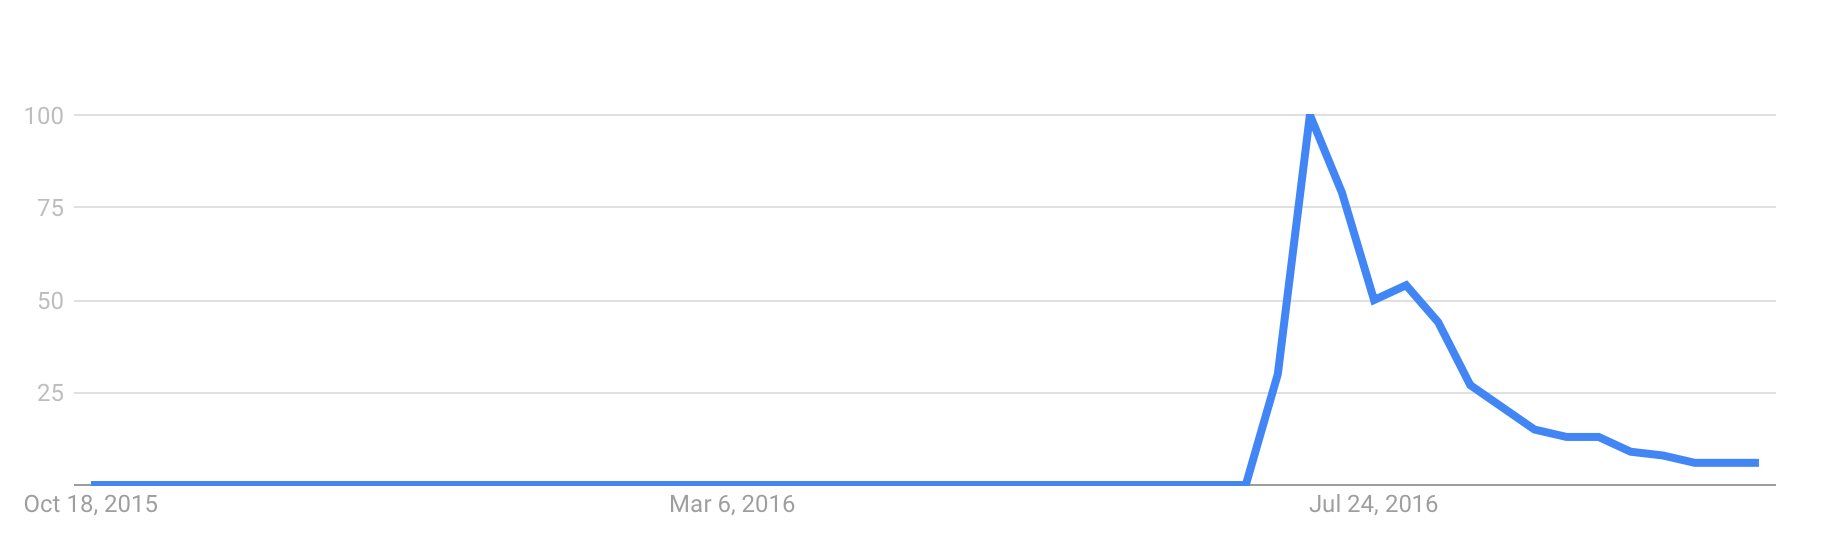 Pokemon GO Google trend spike